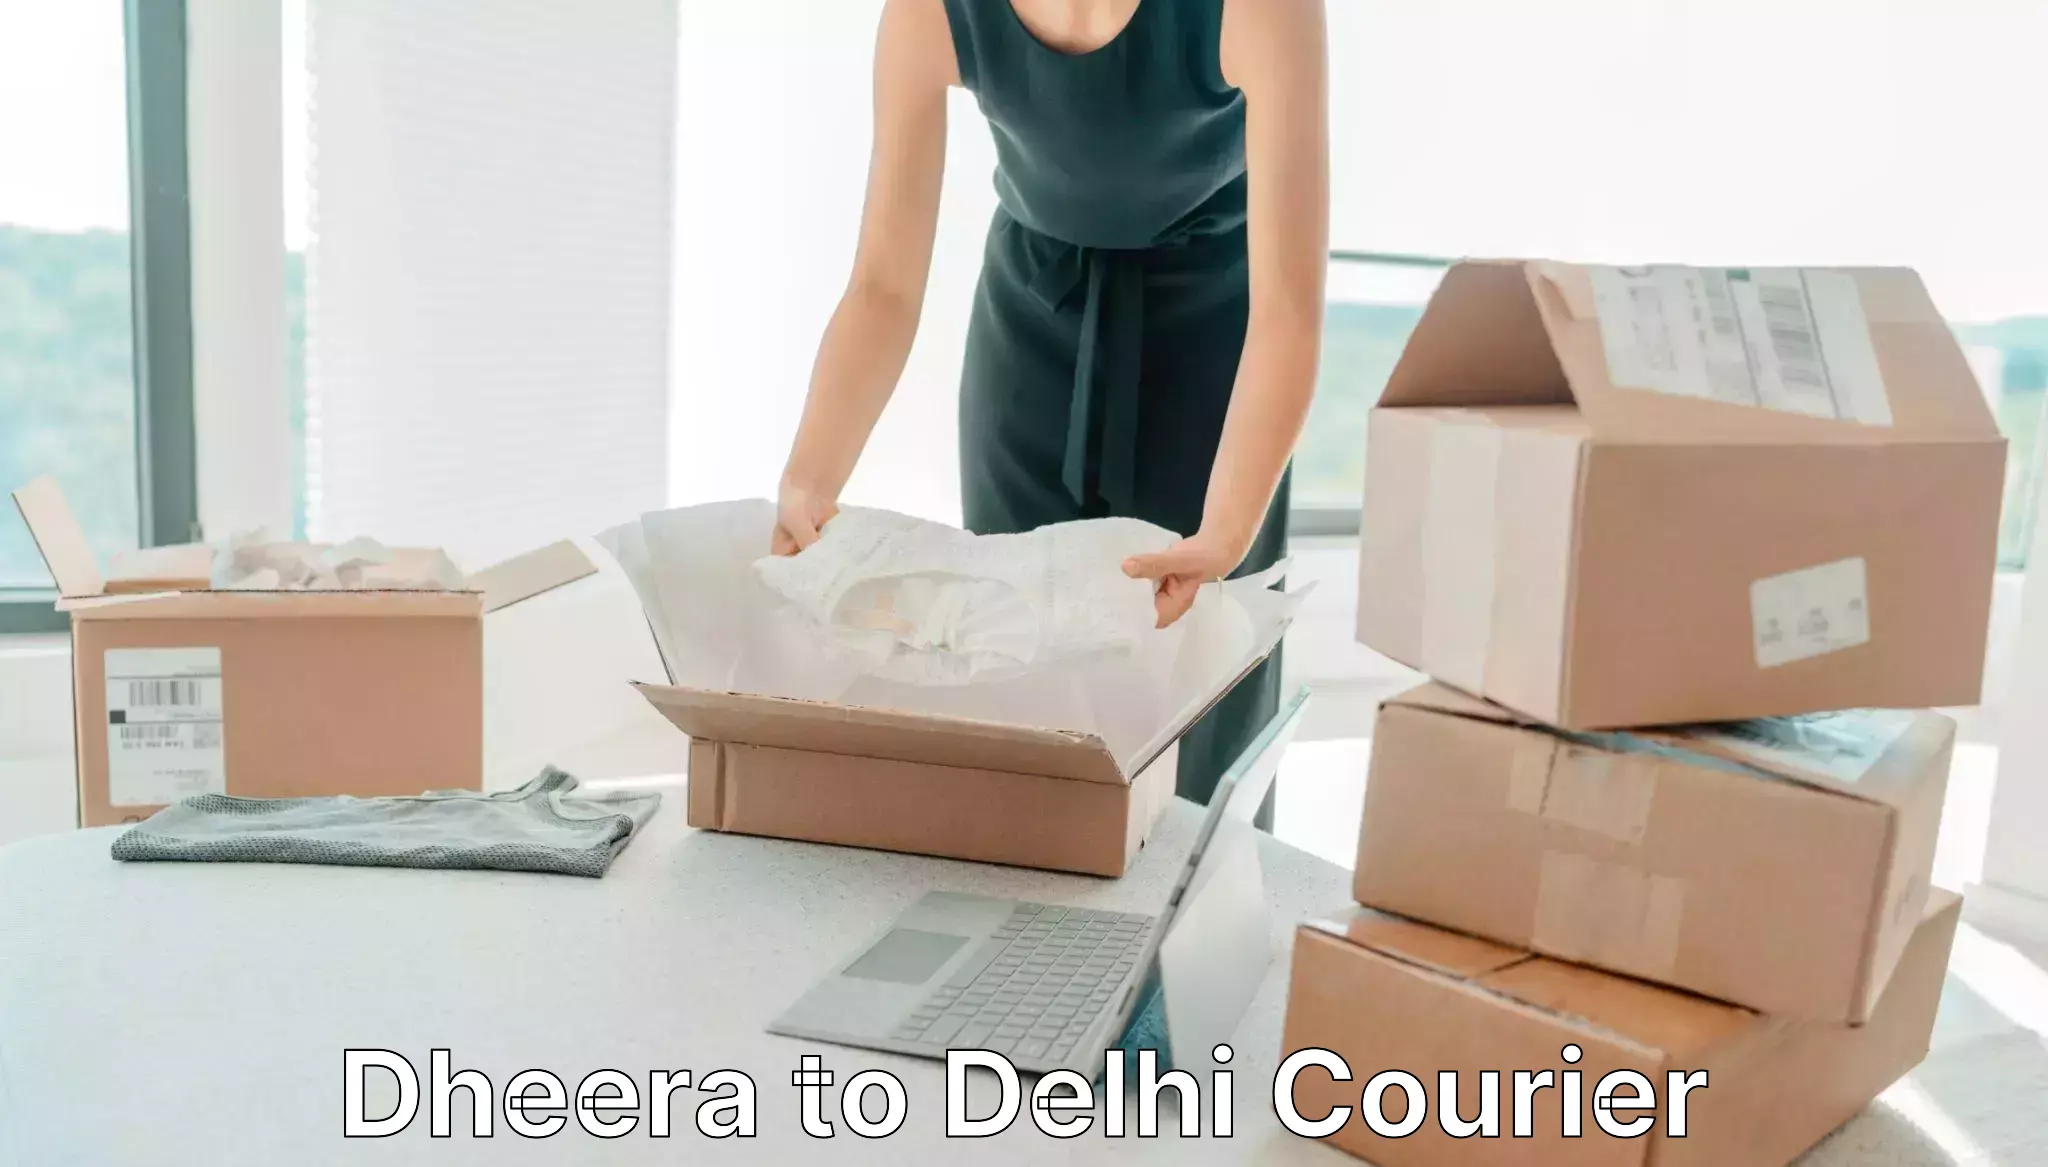 Fast delivery service Dheera to Delhi